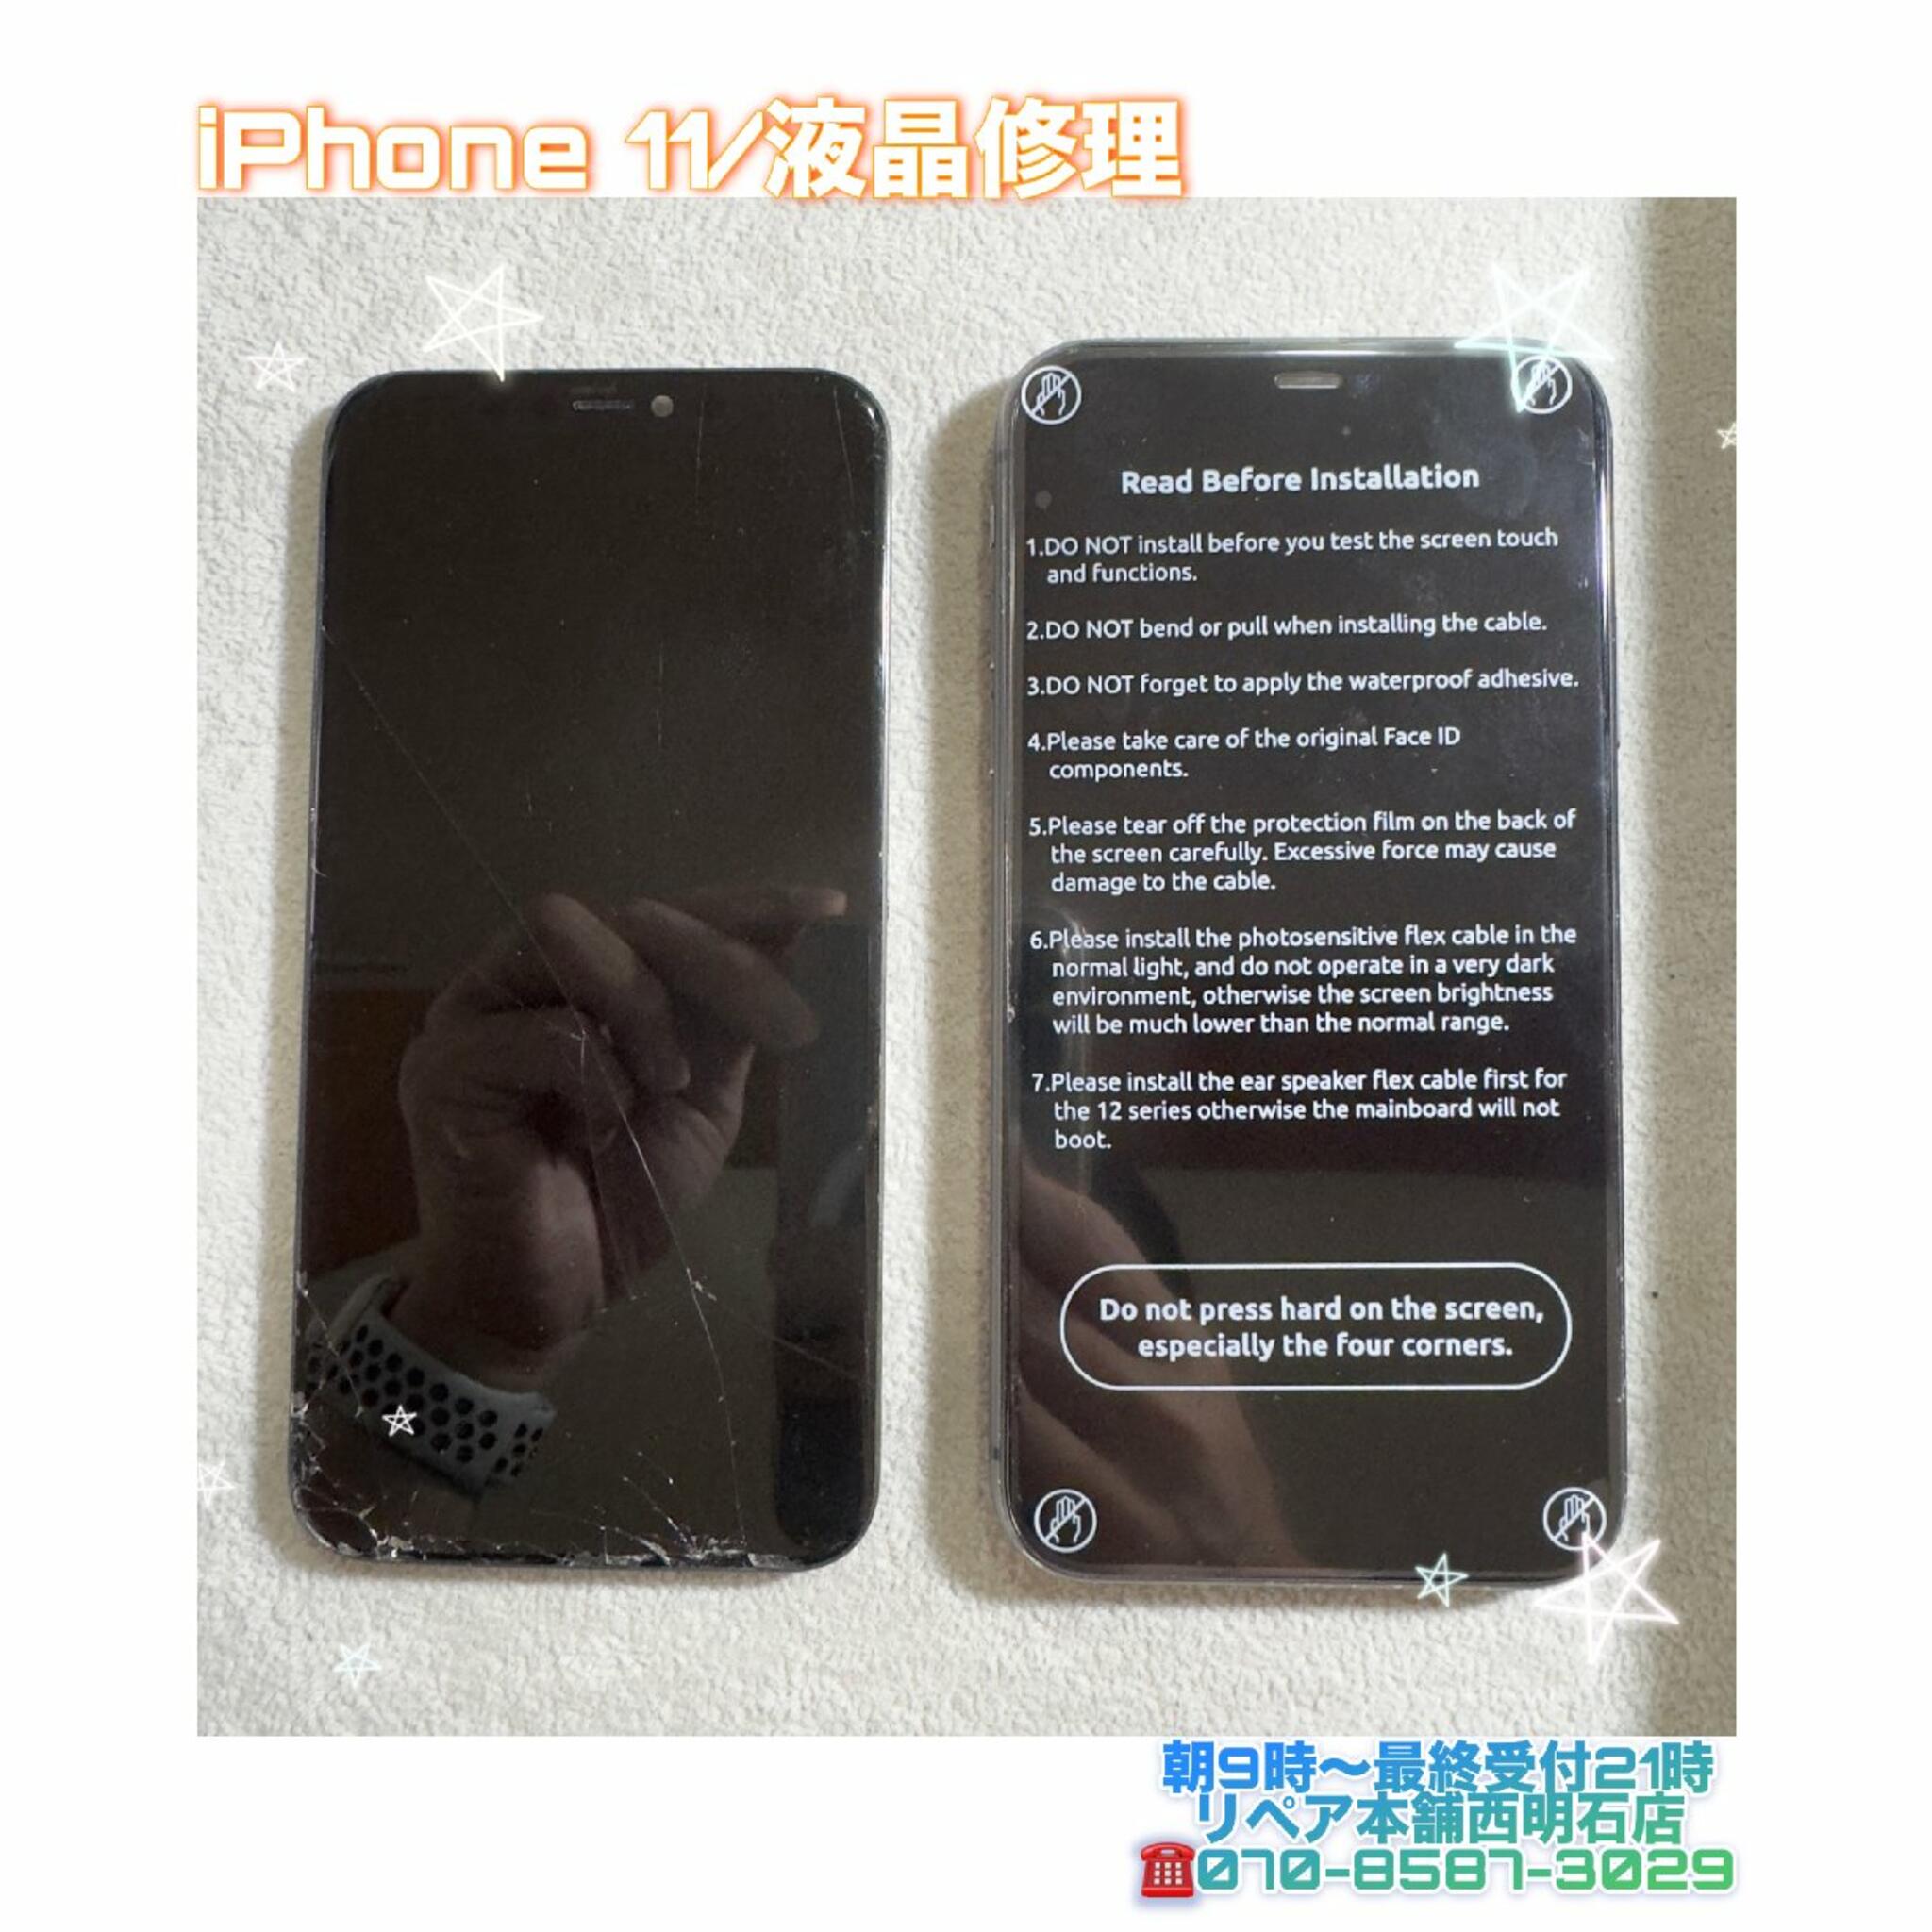 iPhone修理 明石 リペア本舗 西明石店からのお知らせ(💡神戸市西区の方より、iPhone 11液晶修理のご依頼を頂きました🫡)に関する写真